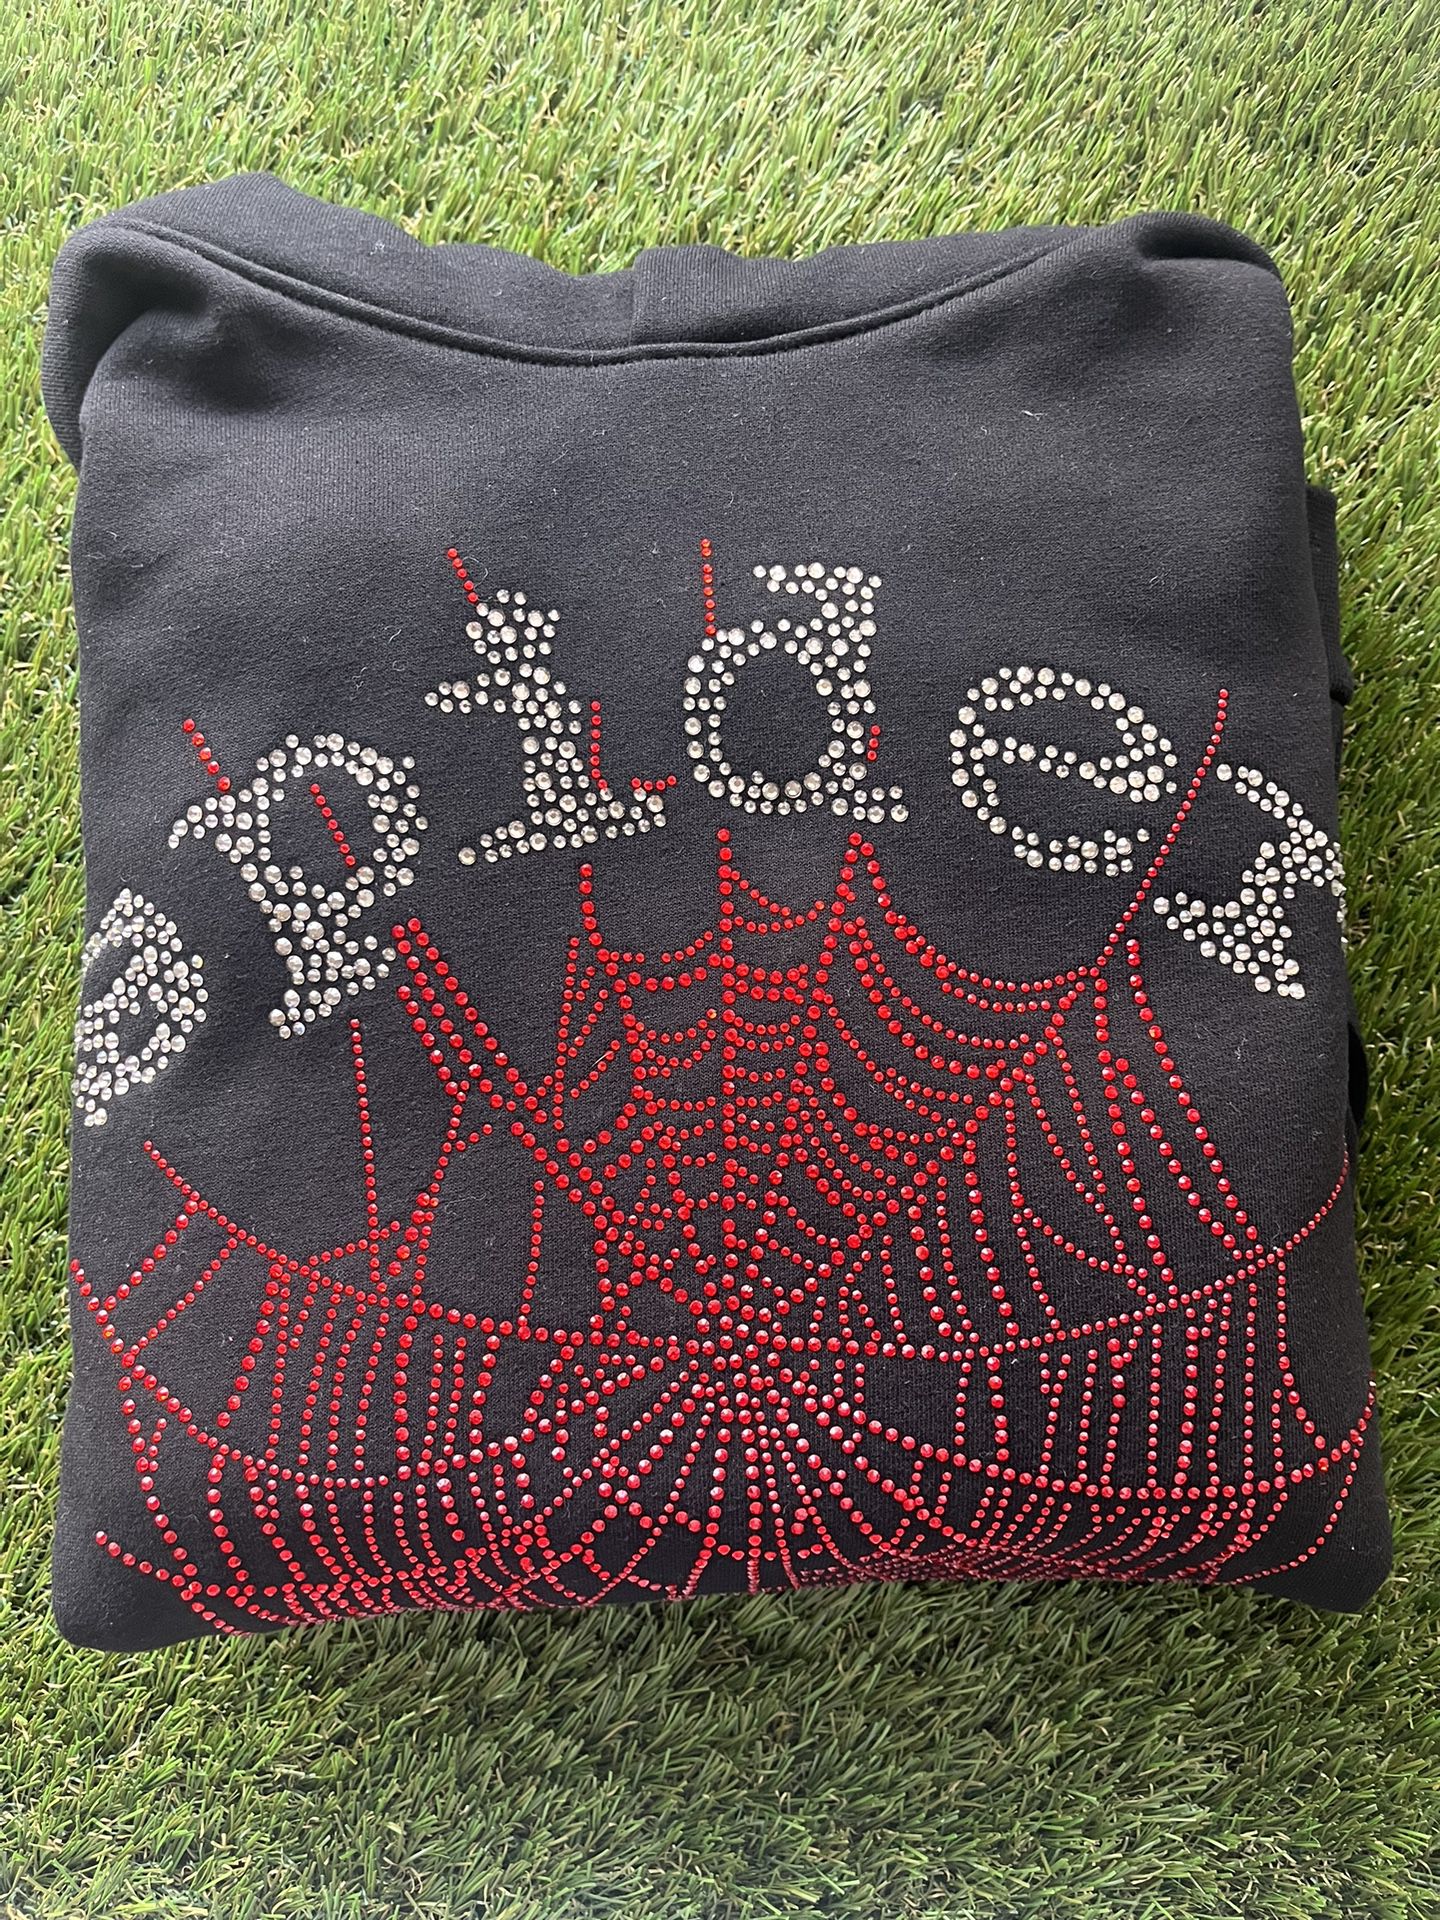 Spider Hoodie OG Rhinestone Black and Red